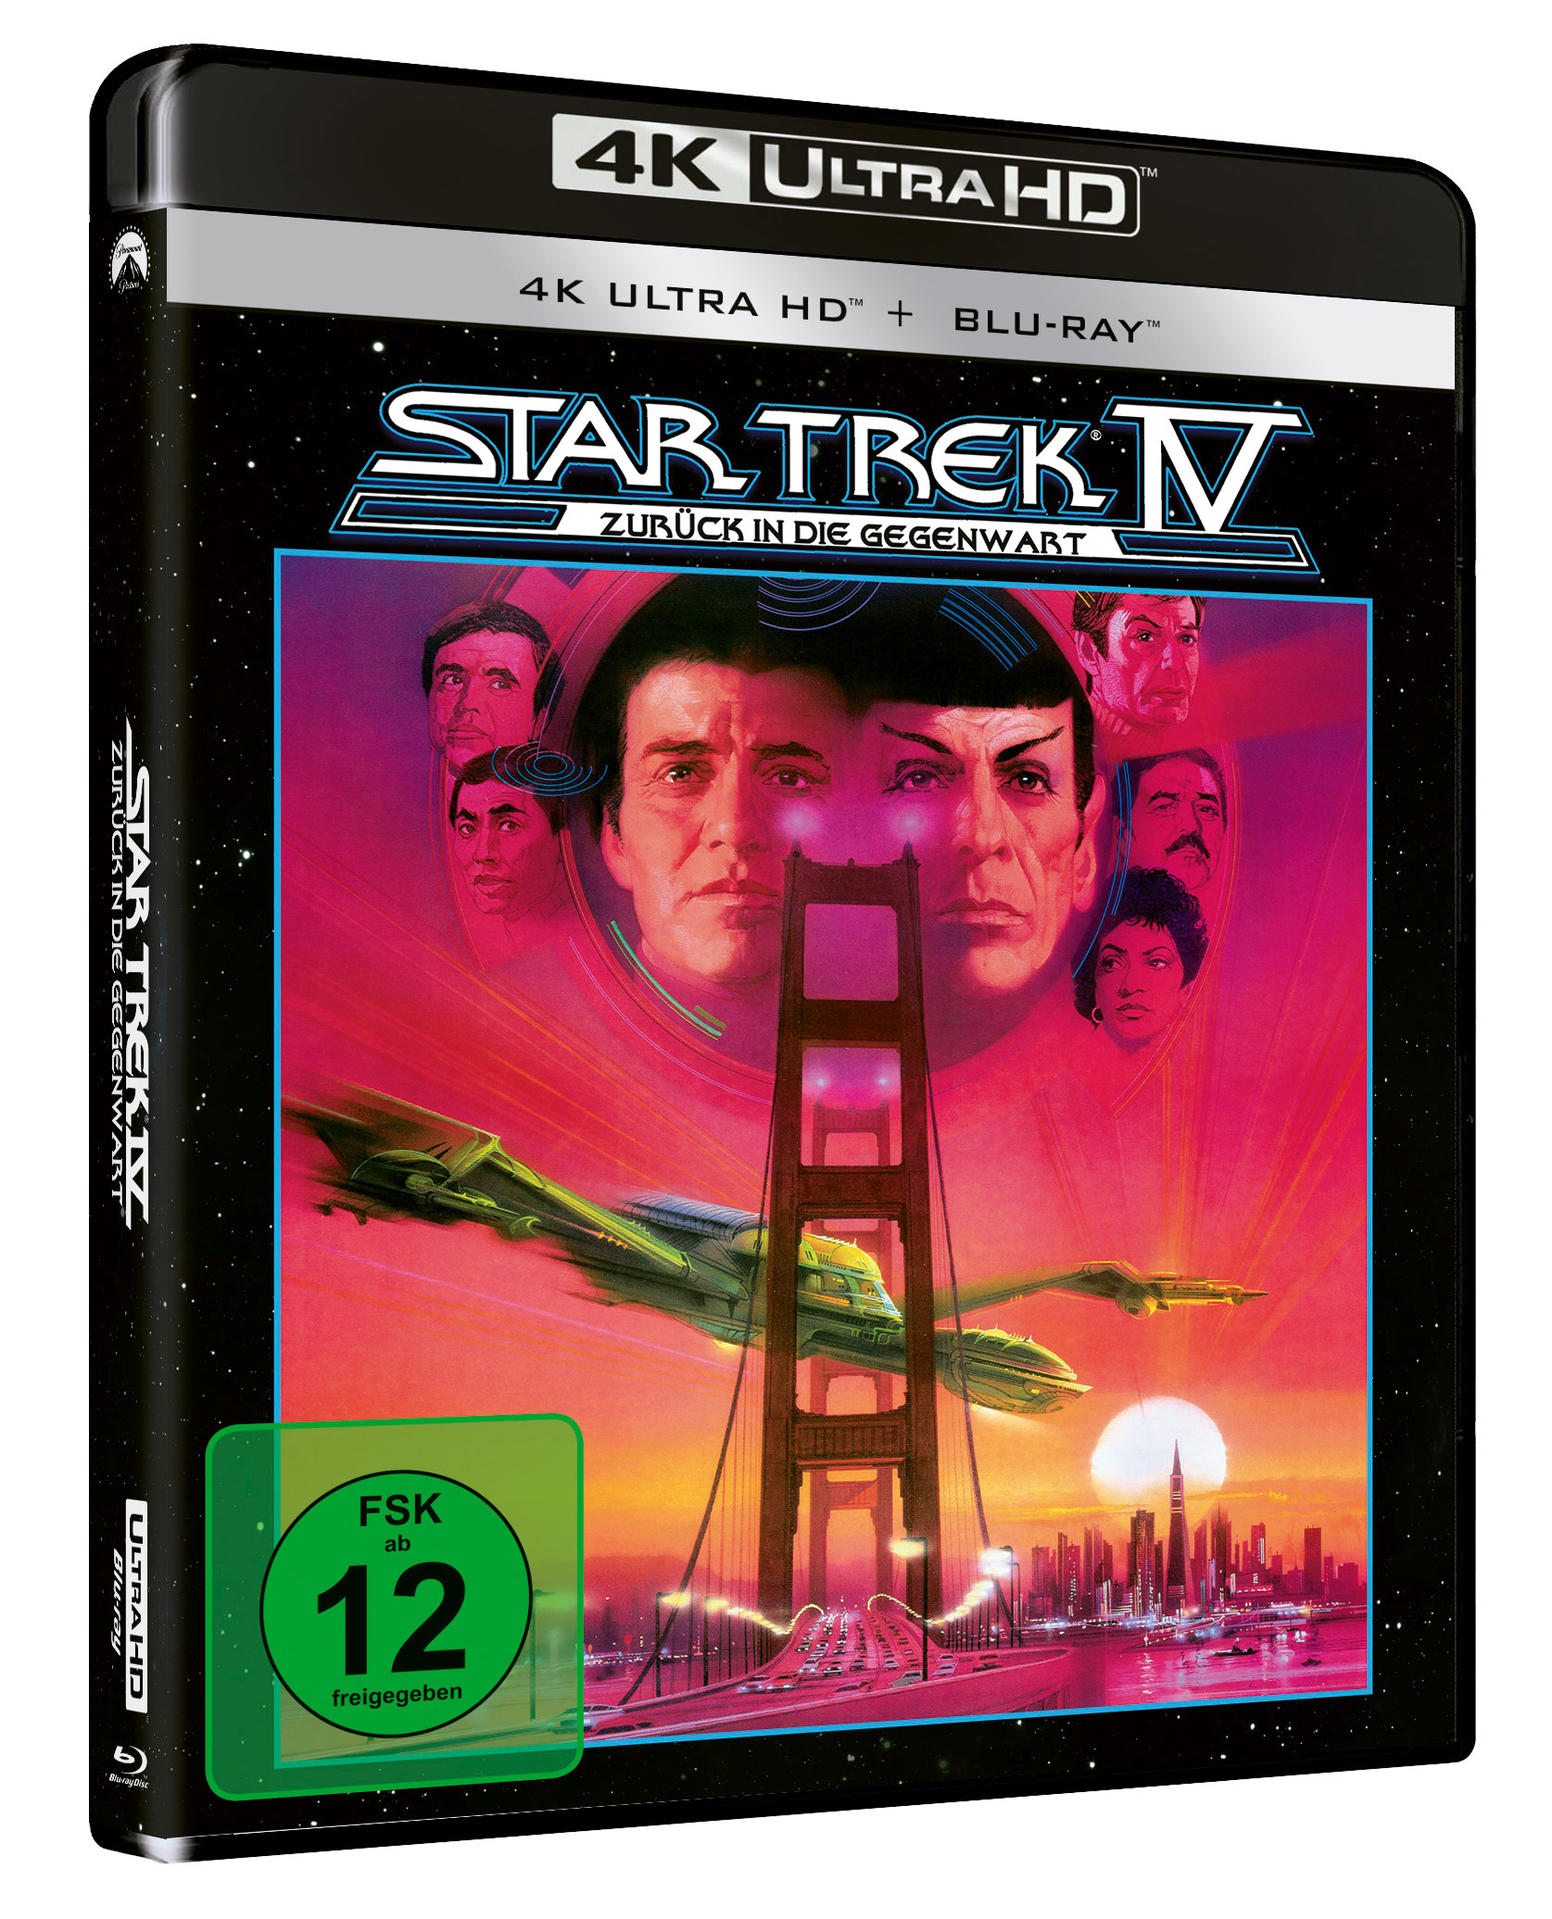 Gegenwart HD IV Zurück die - Trek Blu-ray 4K in Blu-ray + Ultra Star